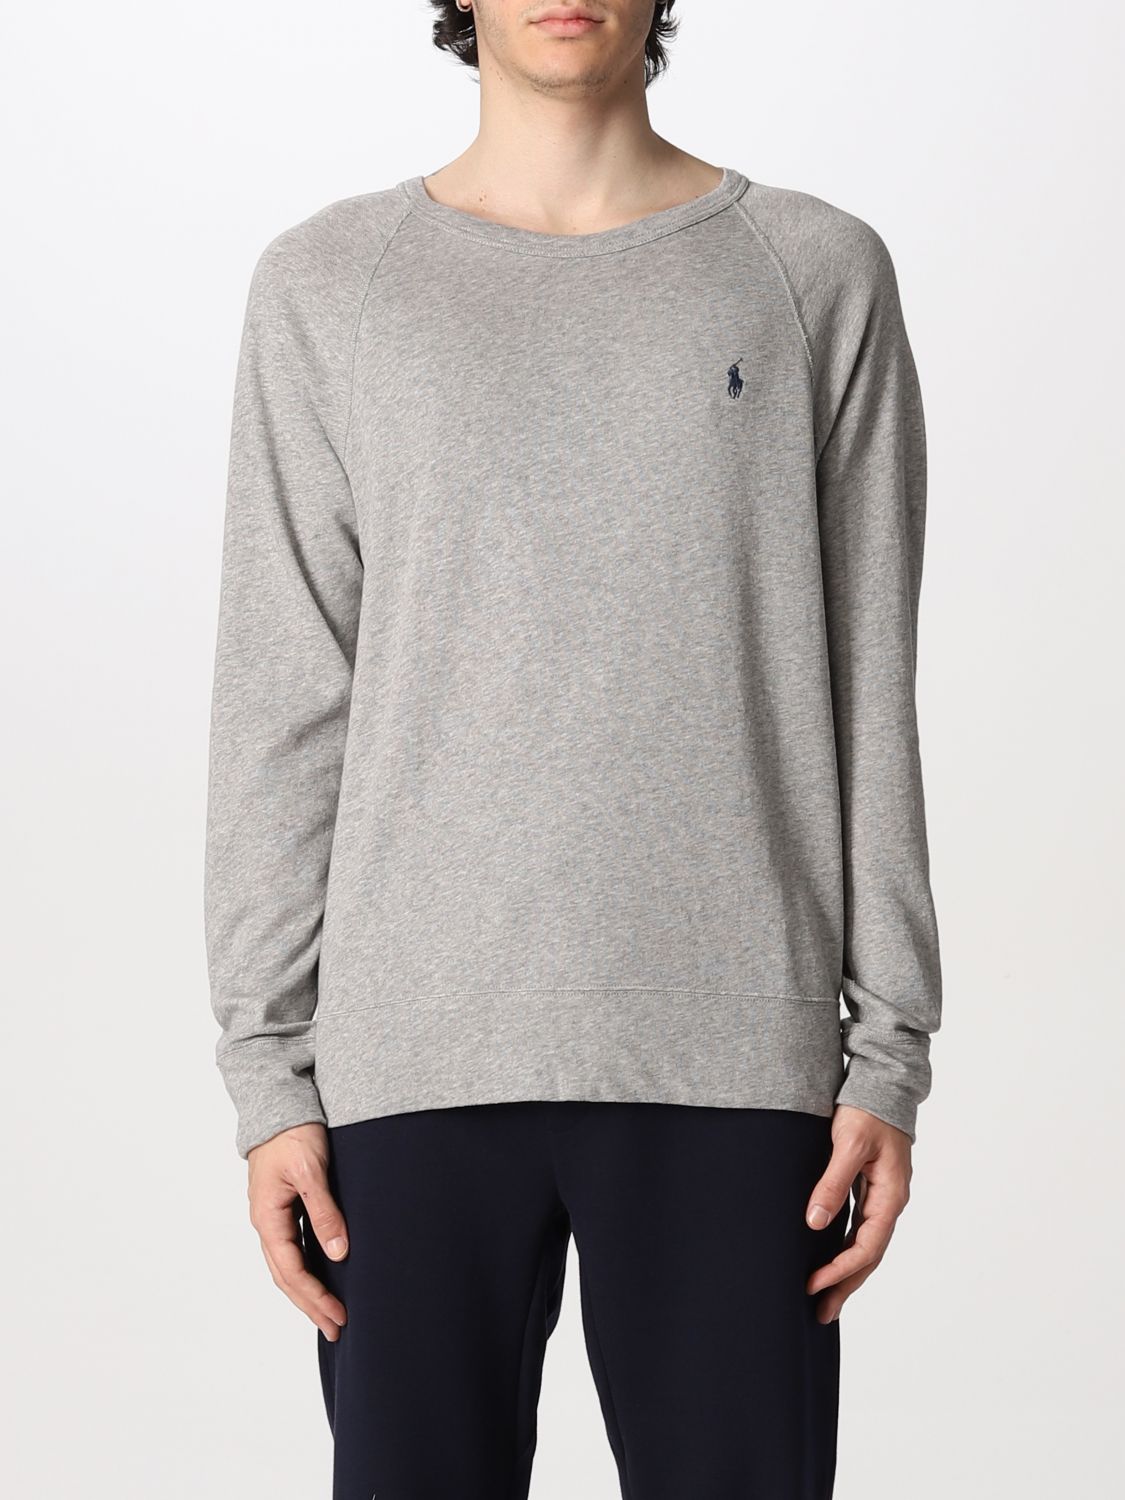 POLO RALPH LAUREN: sweatshirt in cotton blend with logo - Grey | Polo ...